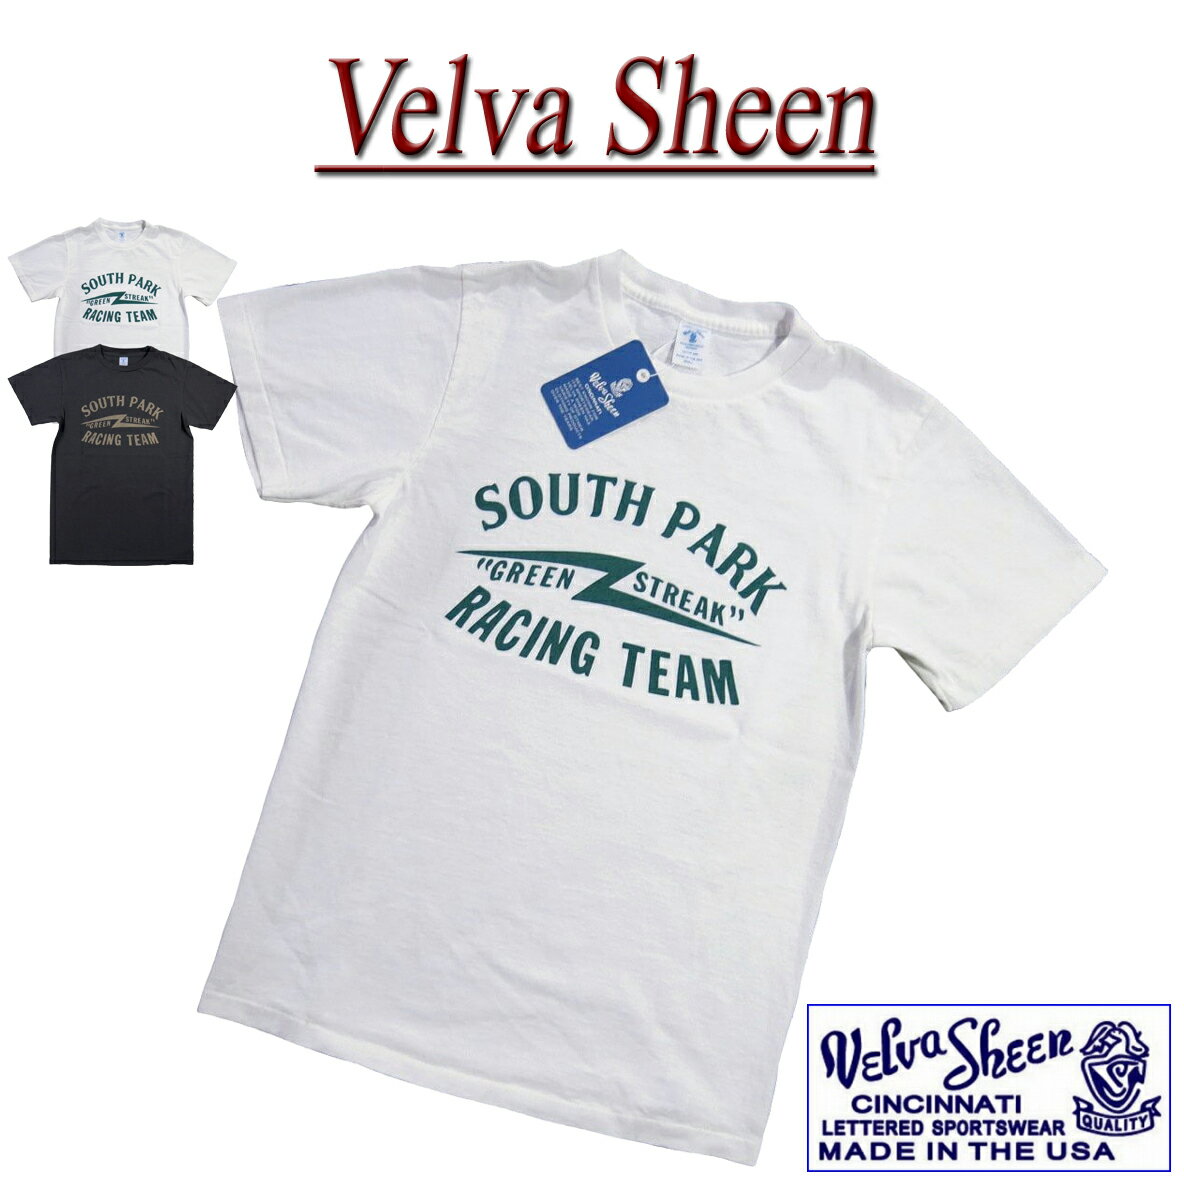  jd561 新品 Velva Sheen USA製 半袖 SOUTH PARK RACING TEAM TEE Tシャツ 162031 ベルバシーン メンズ ブルーレーベル ティーシャツ Made in USA 